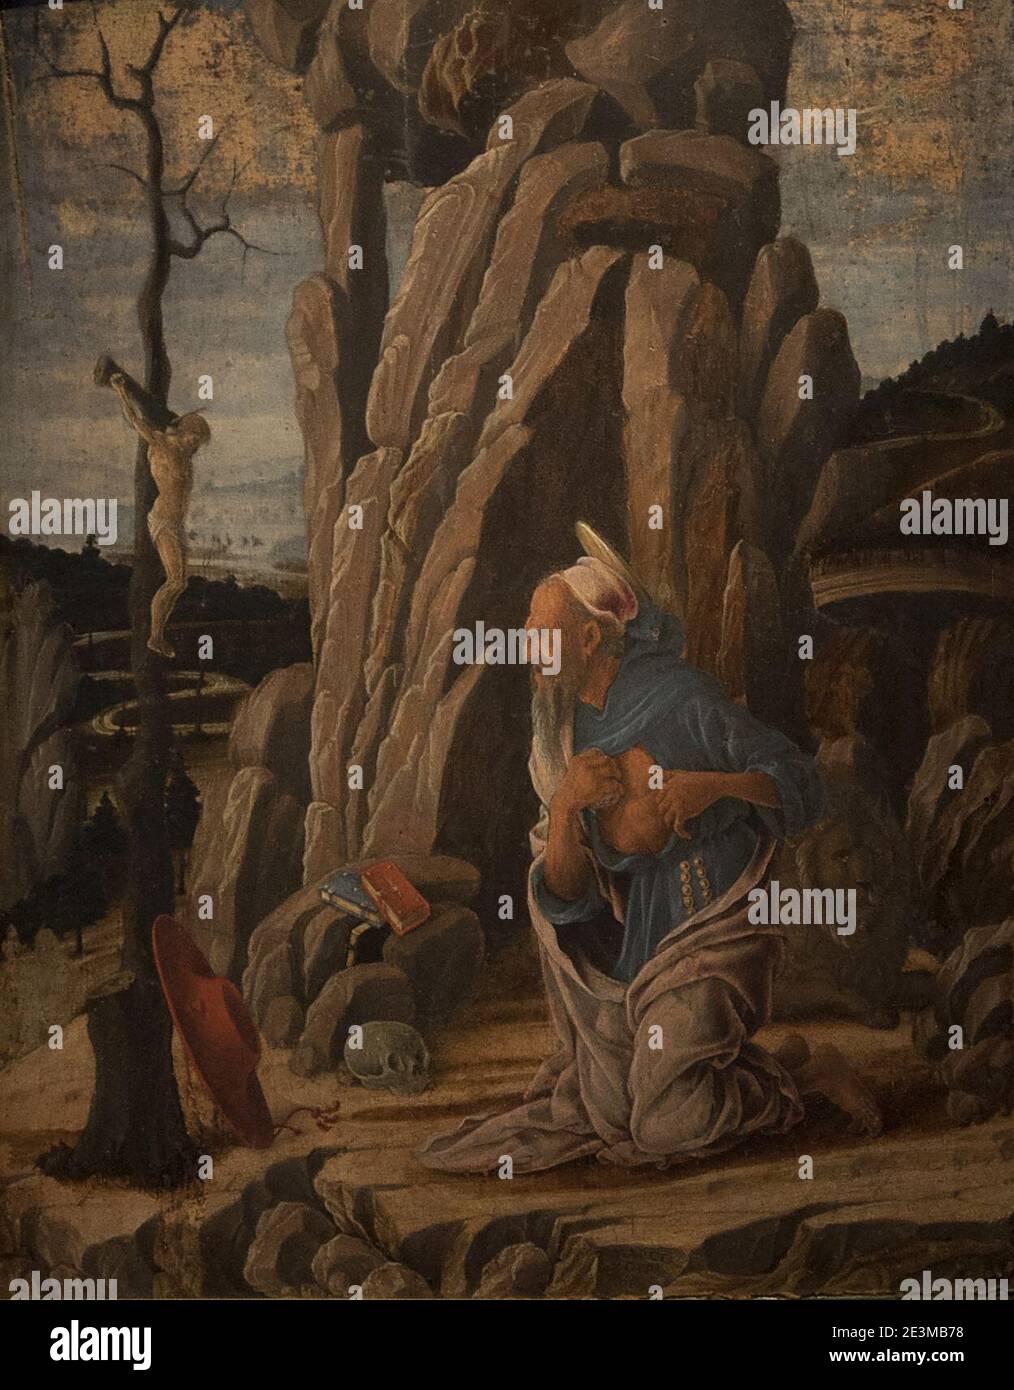 Marco Zoppo (1433-1478) - De Boetvaardige Hiëronymus (1470) - Bologna Pinacoteca Nazionale - 26-04-2012 9-18-30. Stock Photo